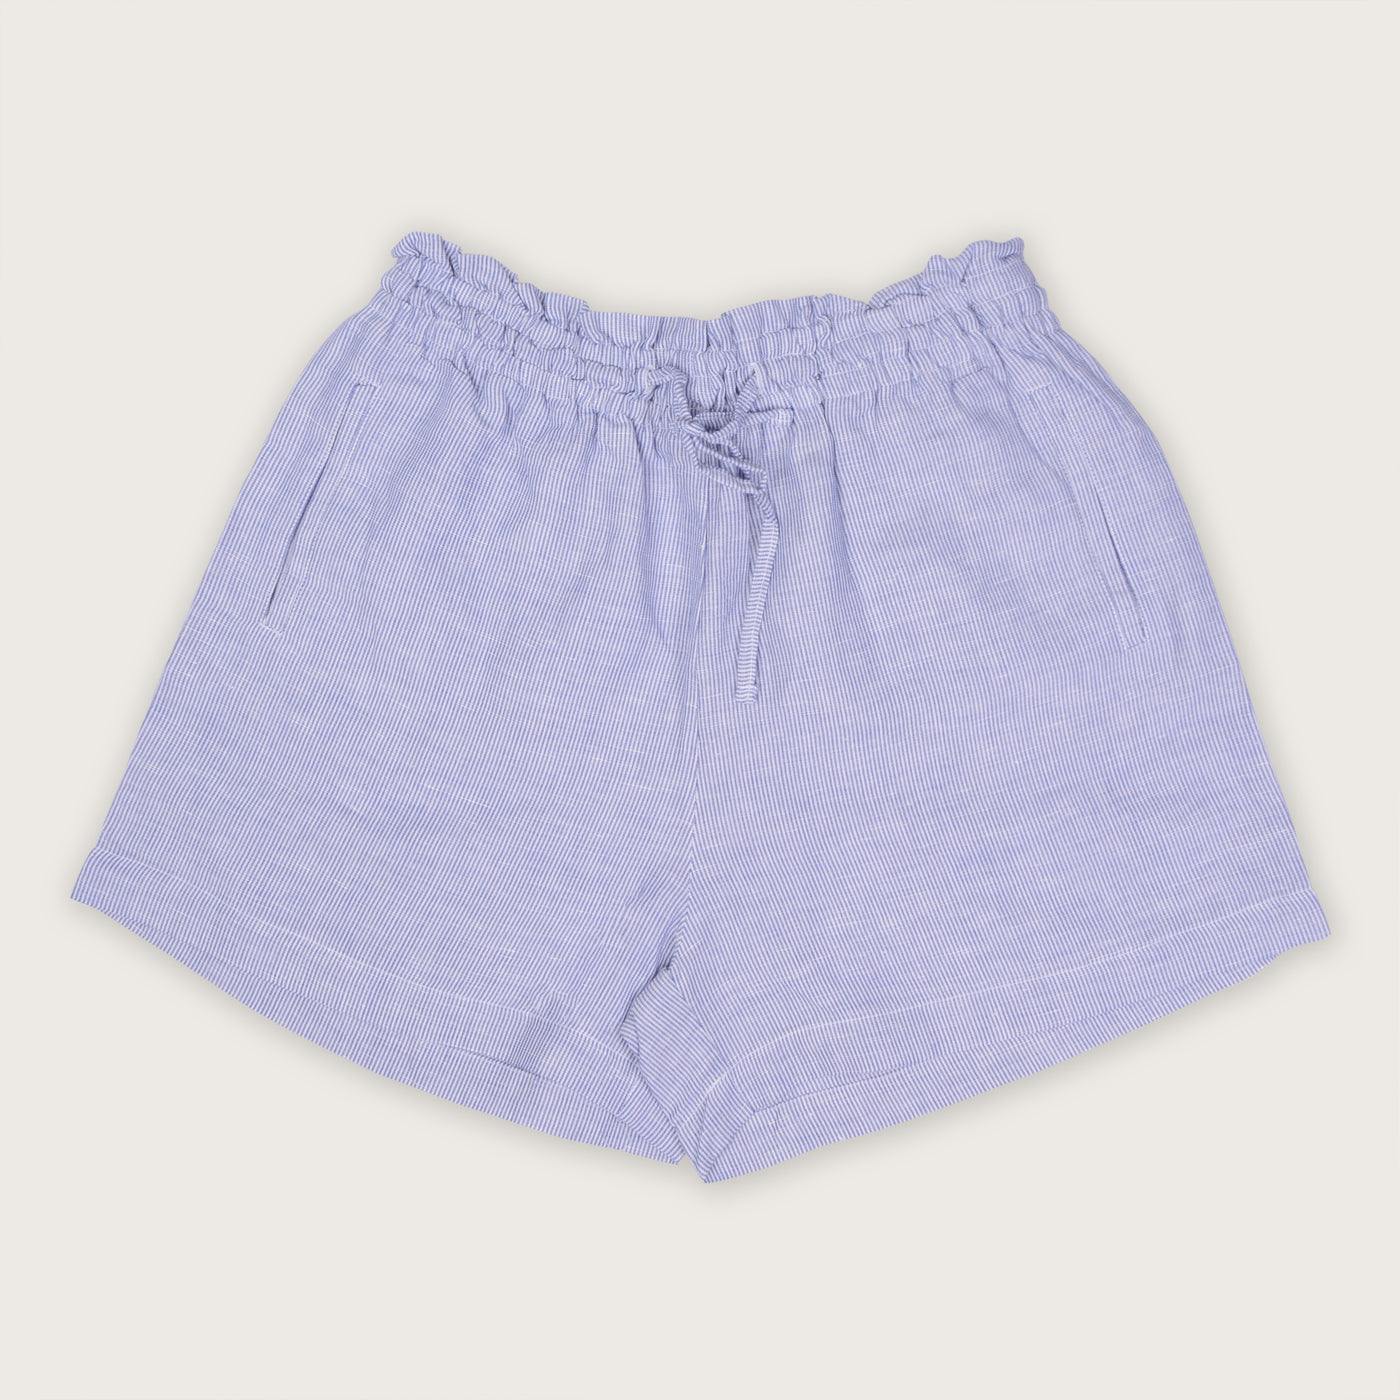 Buy now beach happy shorts